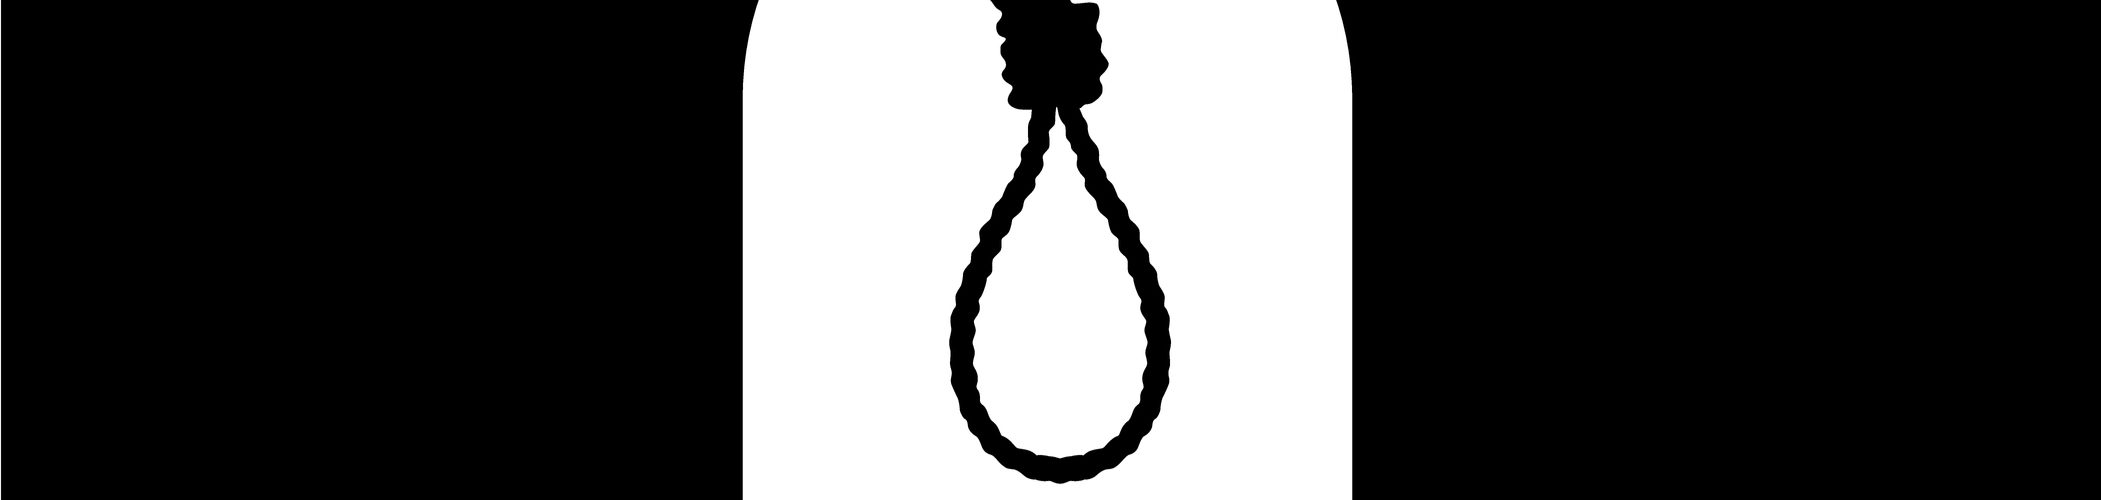 Malaysia death penalty